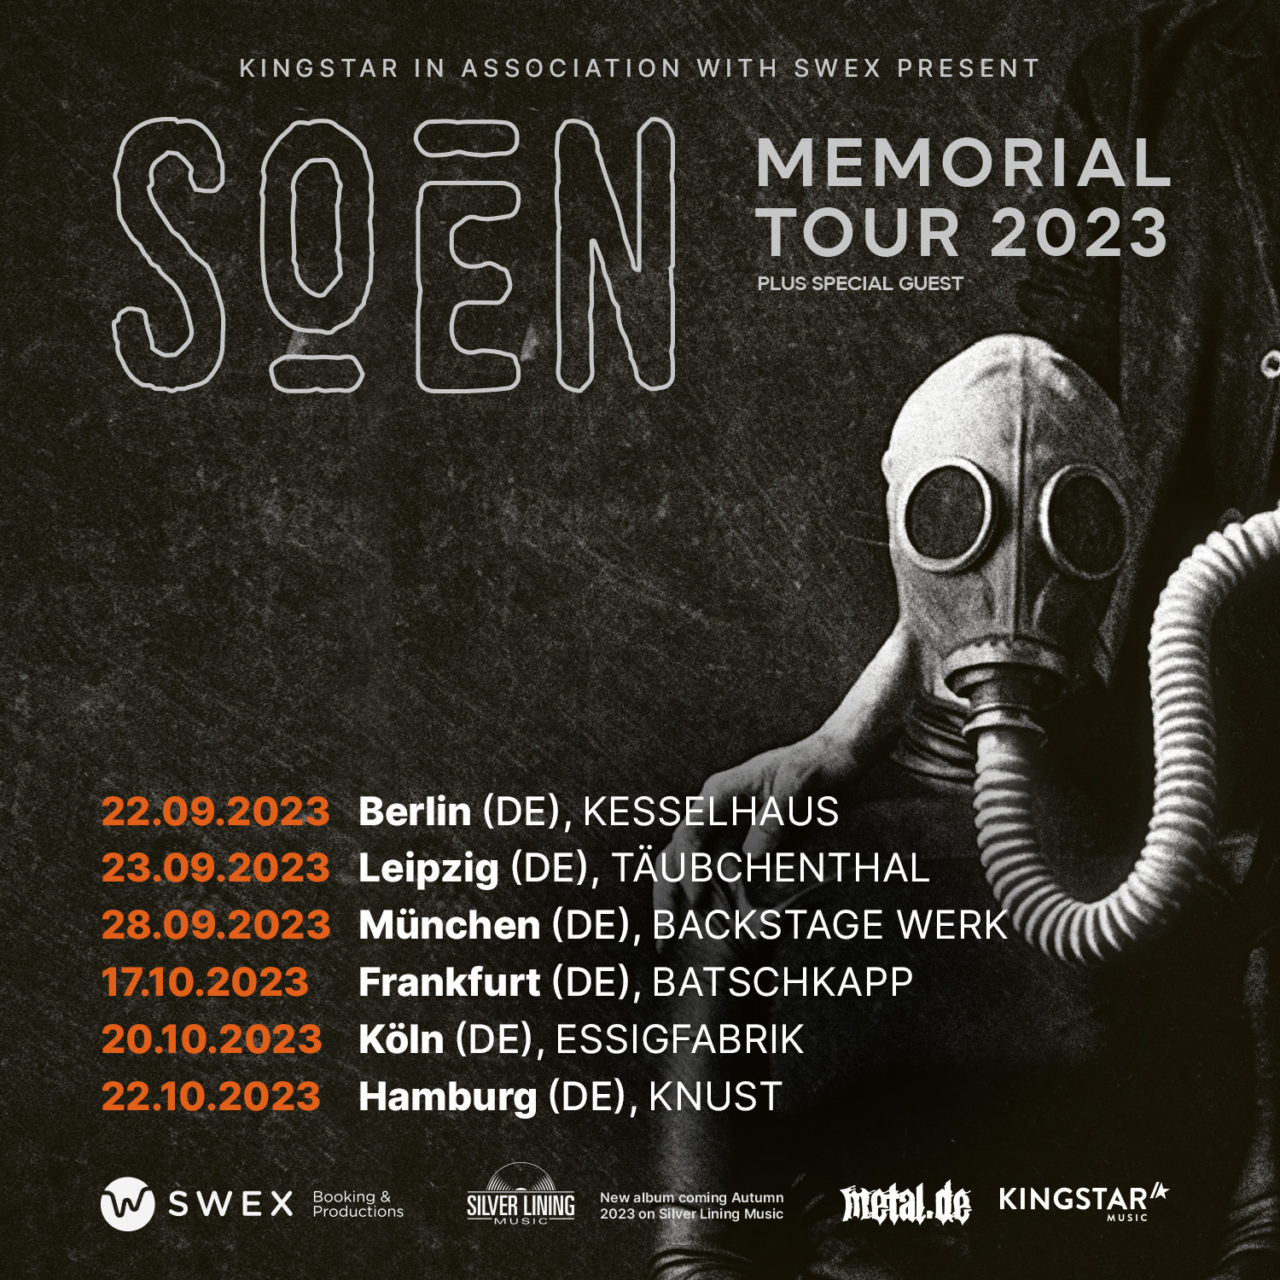 soen tour dates 2023